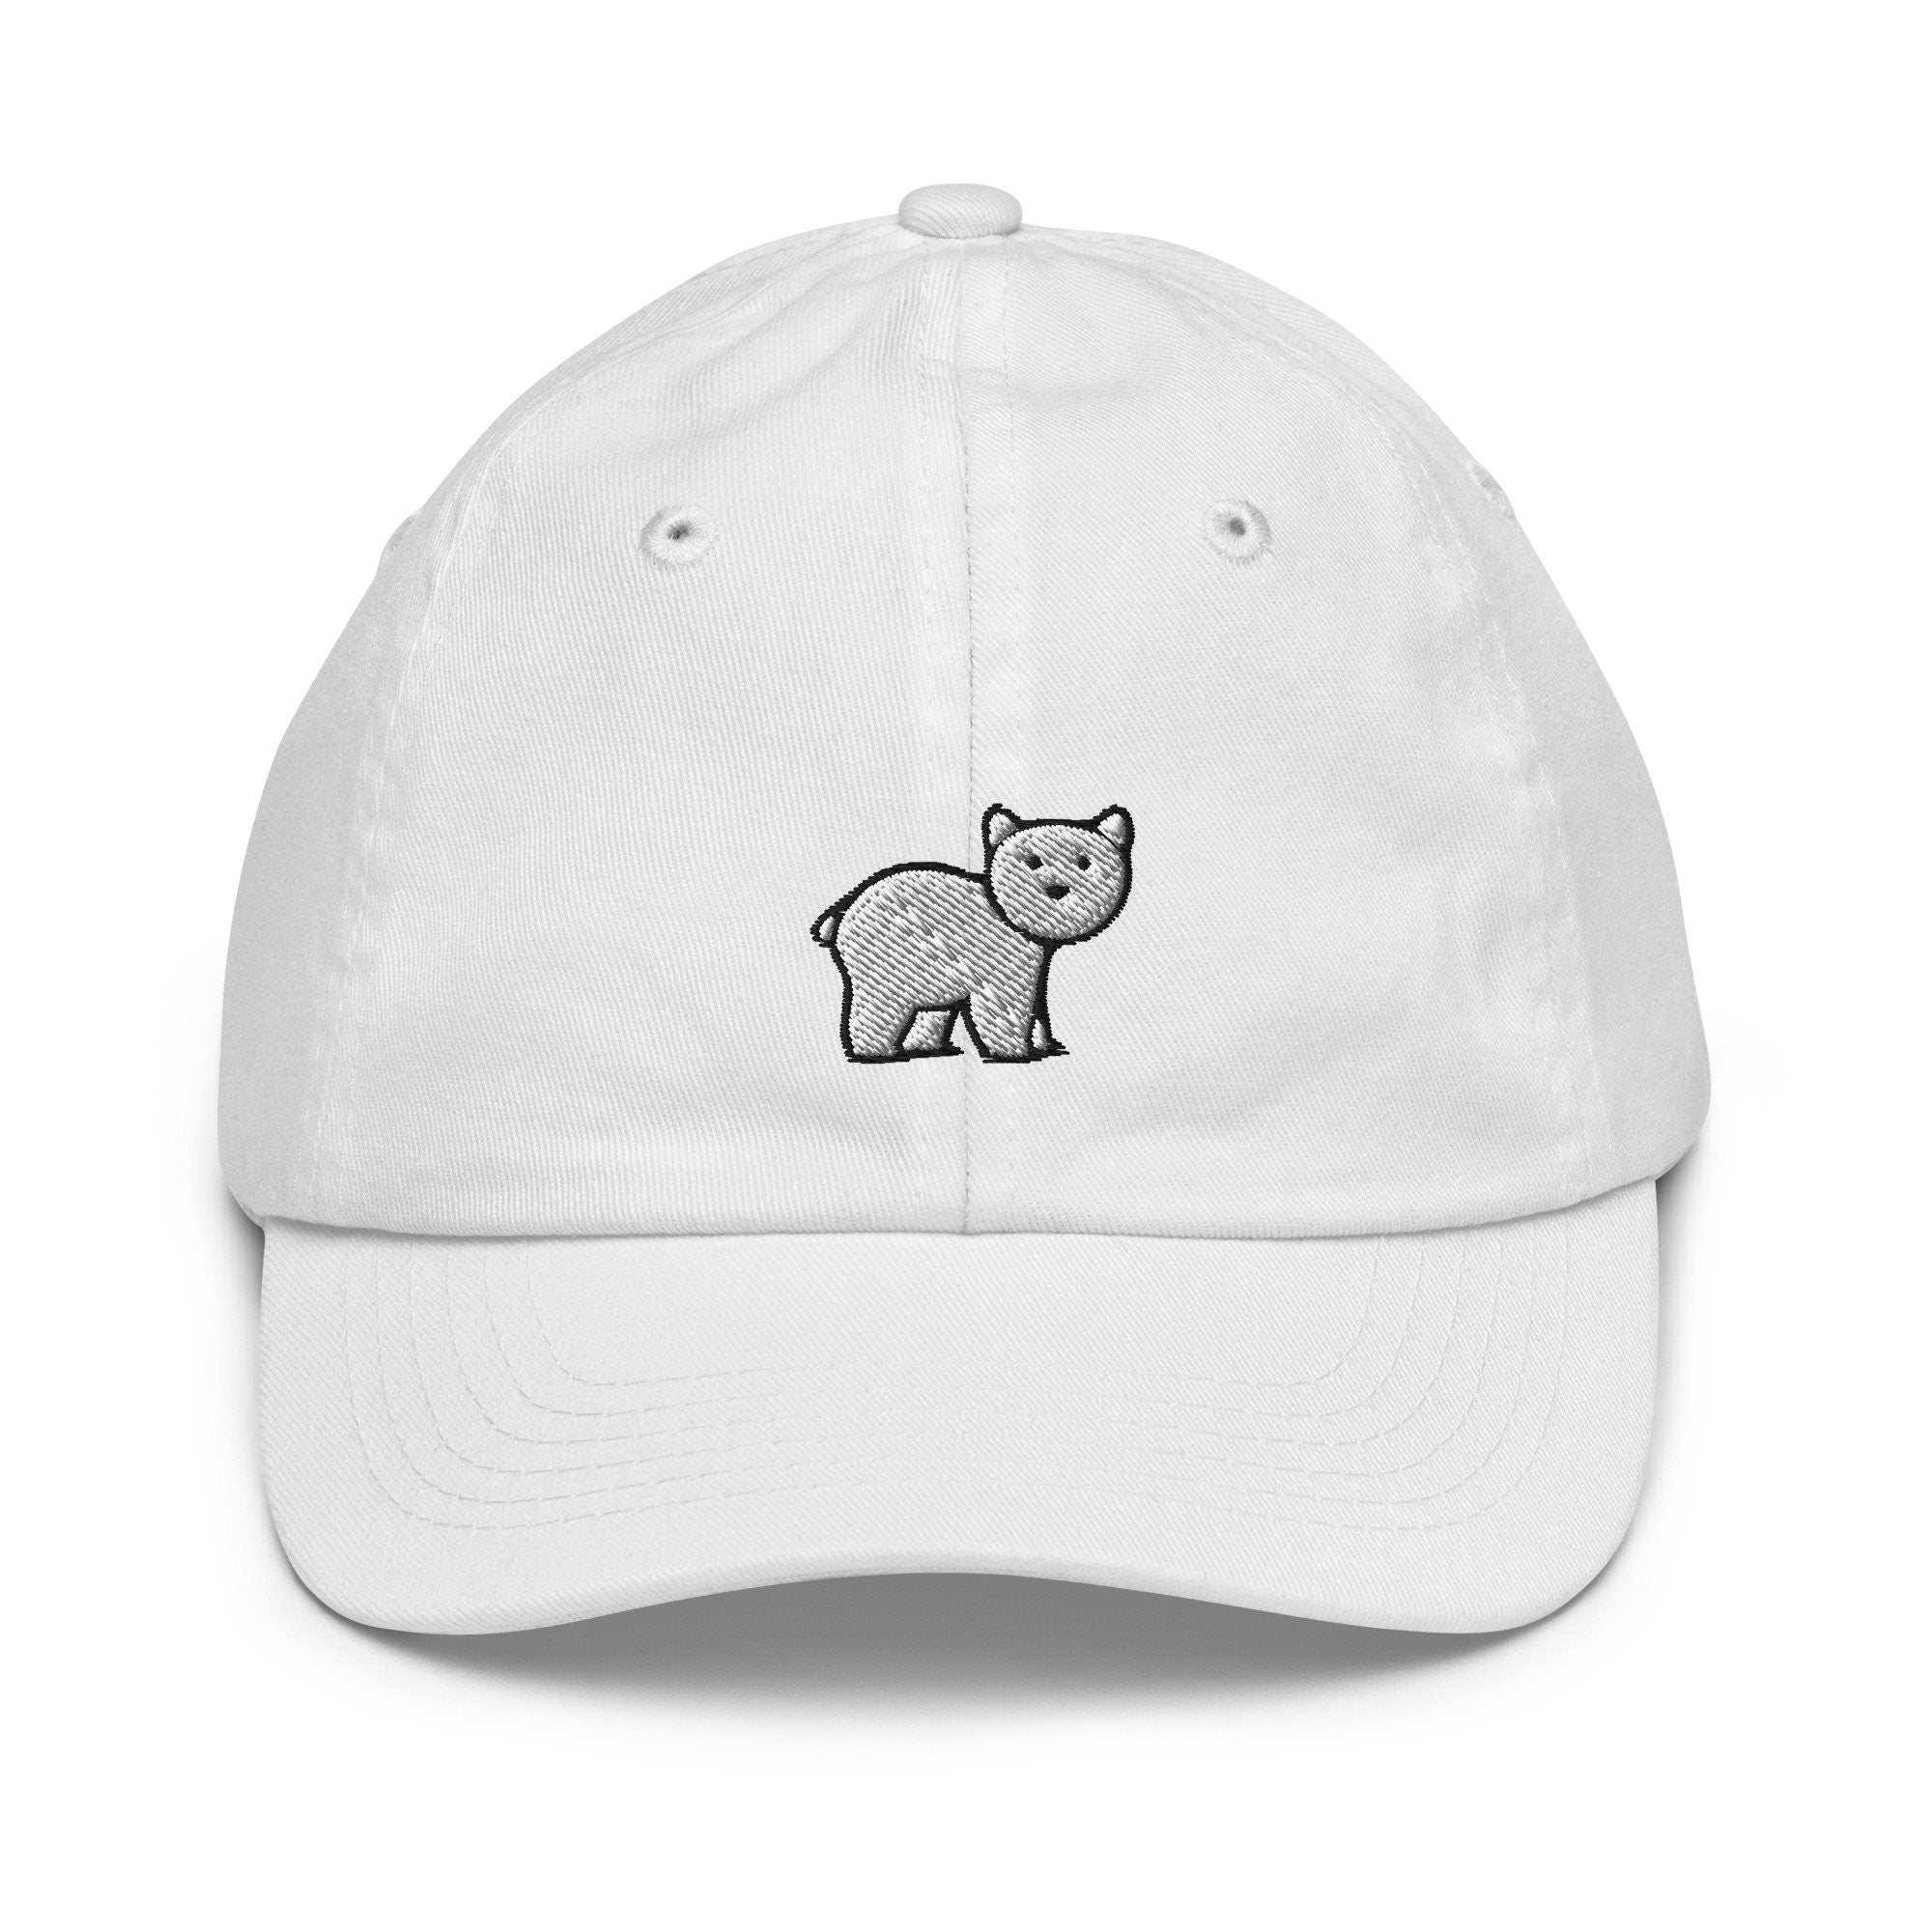 Polar Bear Youth Baseball Cap, Handmade Kids Hat, Embroidered Childrens Hat Gift - Multiple Colors